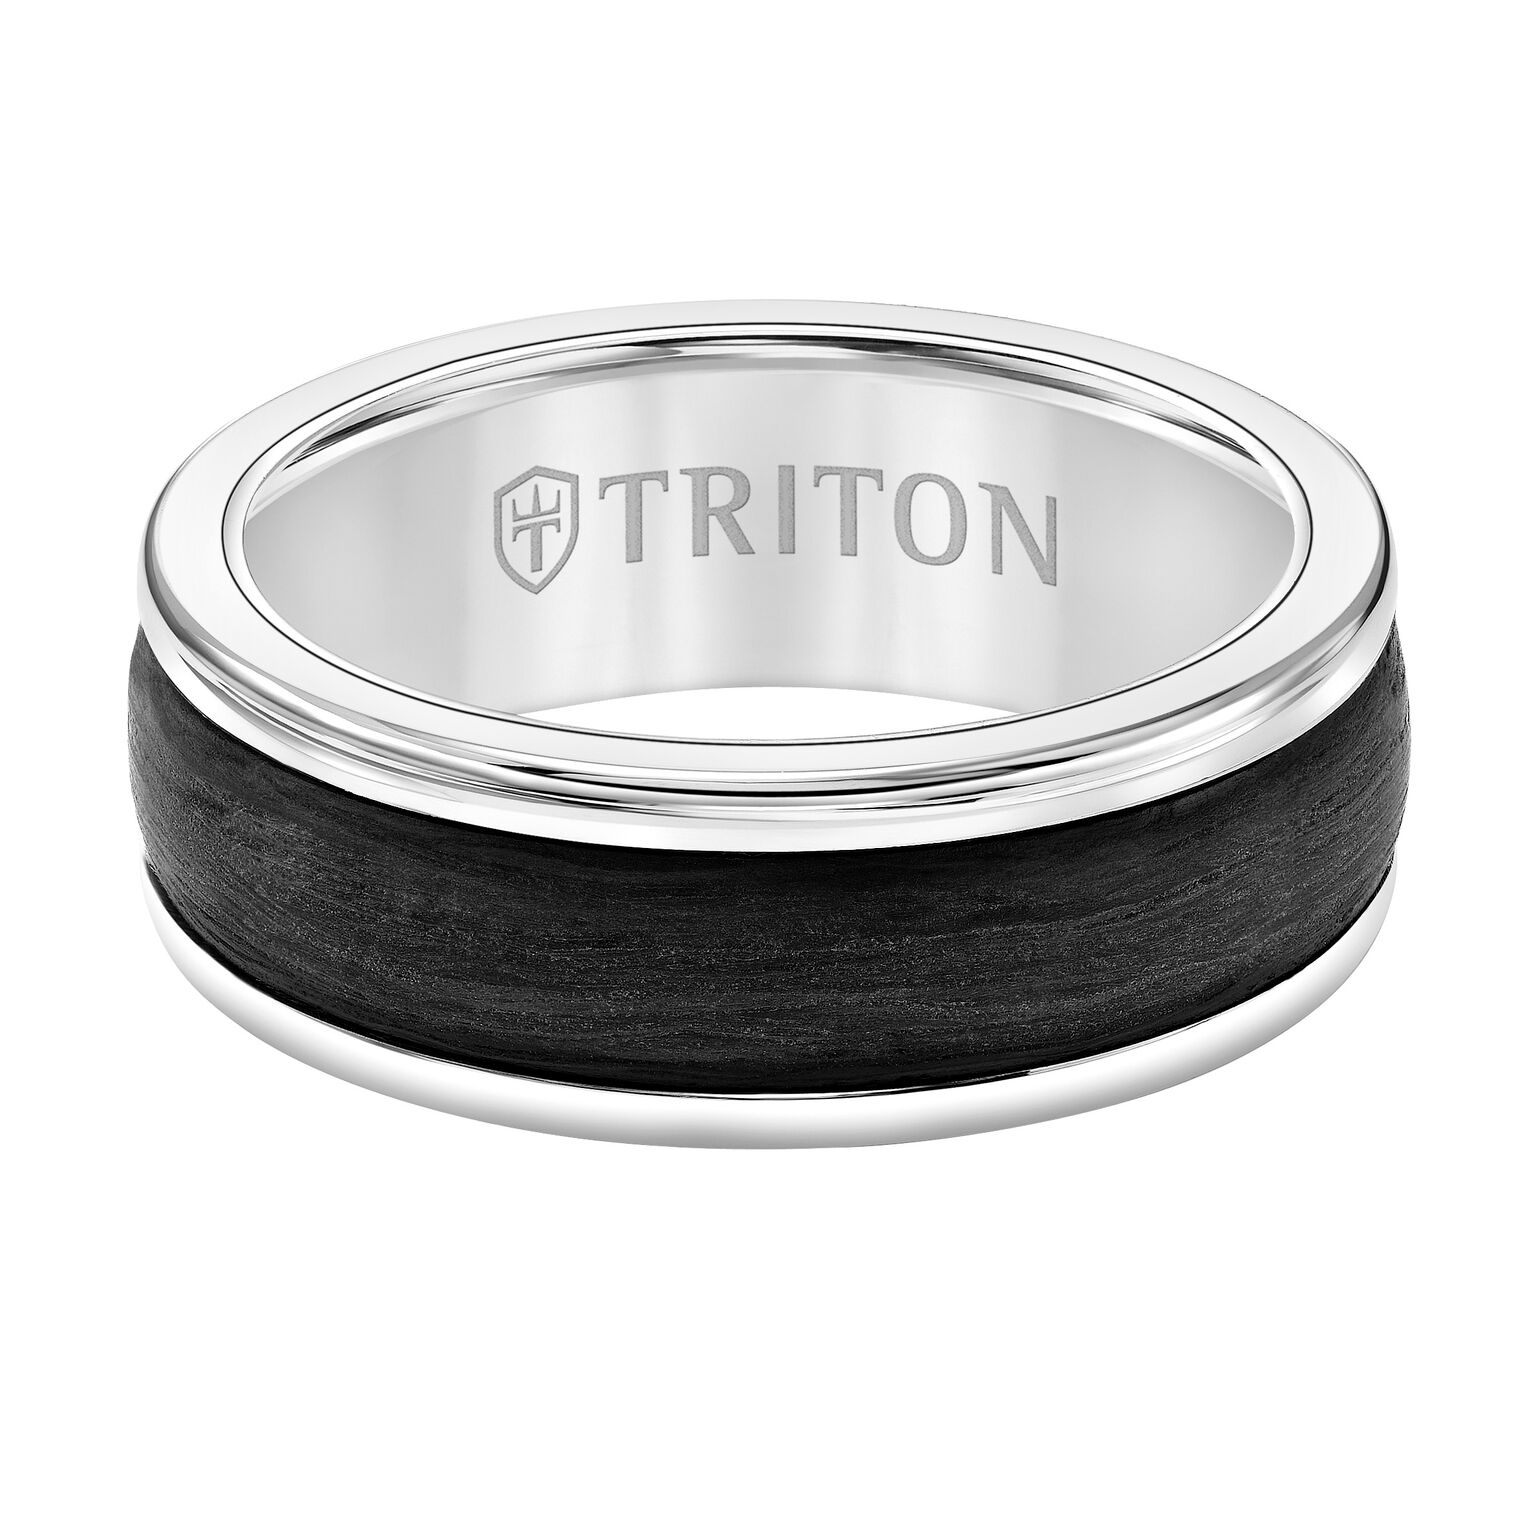 Triton 8mm White TC850 with Black Carbon Fiber